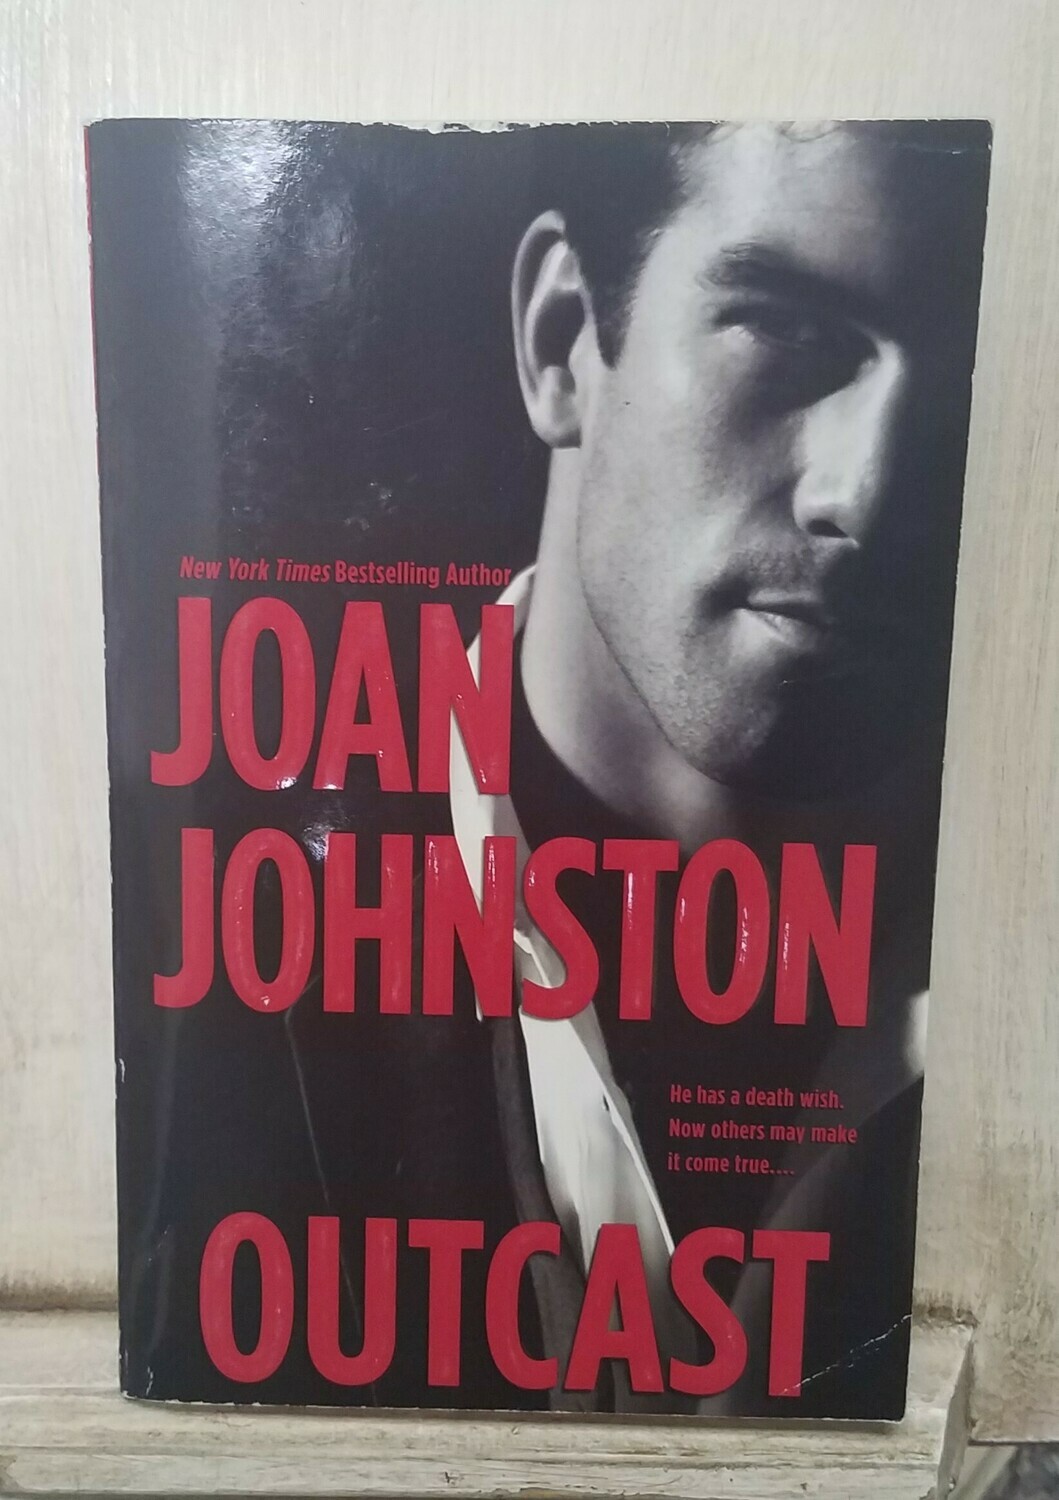 Outcast by Joan Johnston